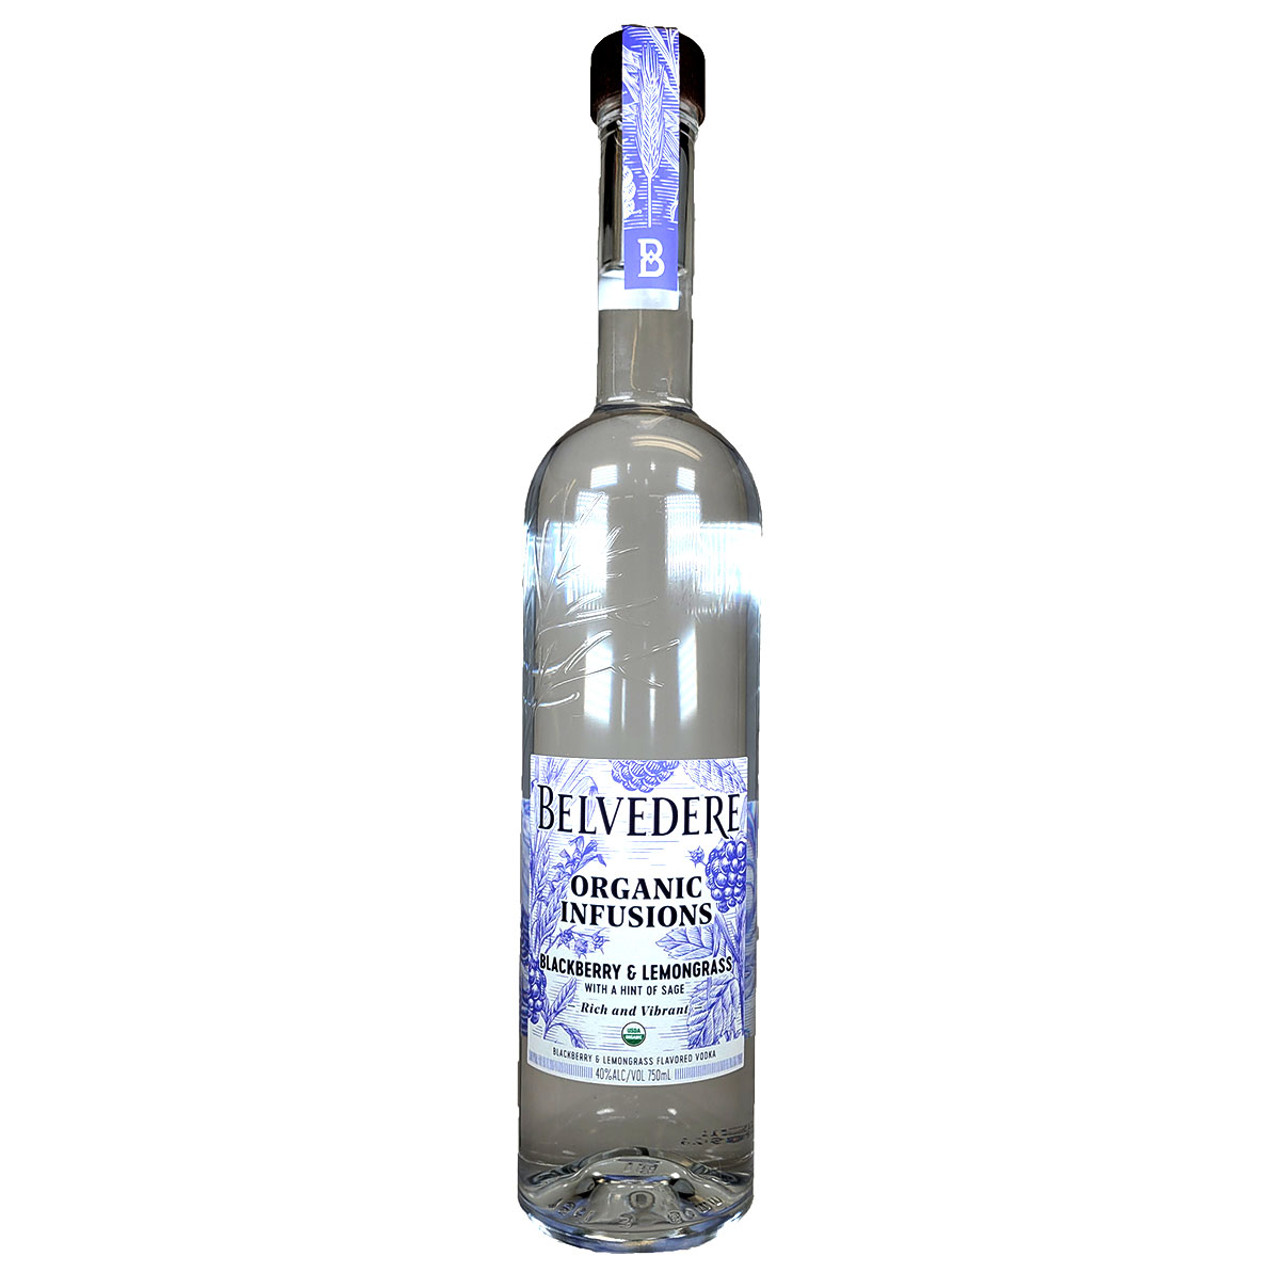 Belvedere Organic Infusions - Blackberry Lemongrass Vodka (750ml)